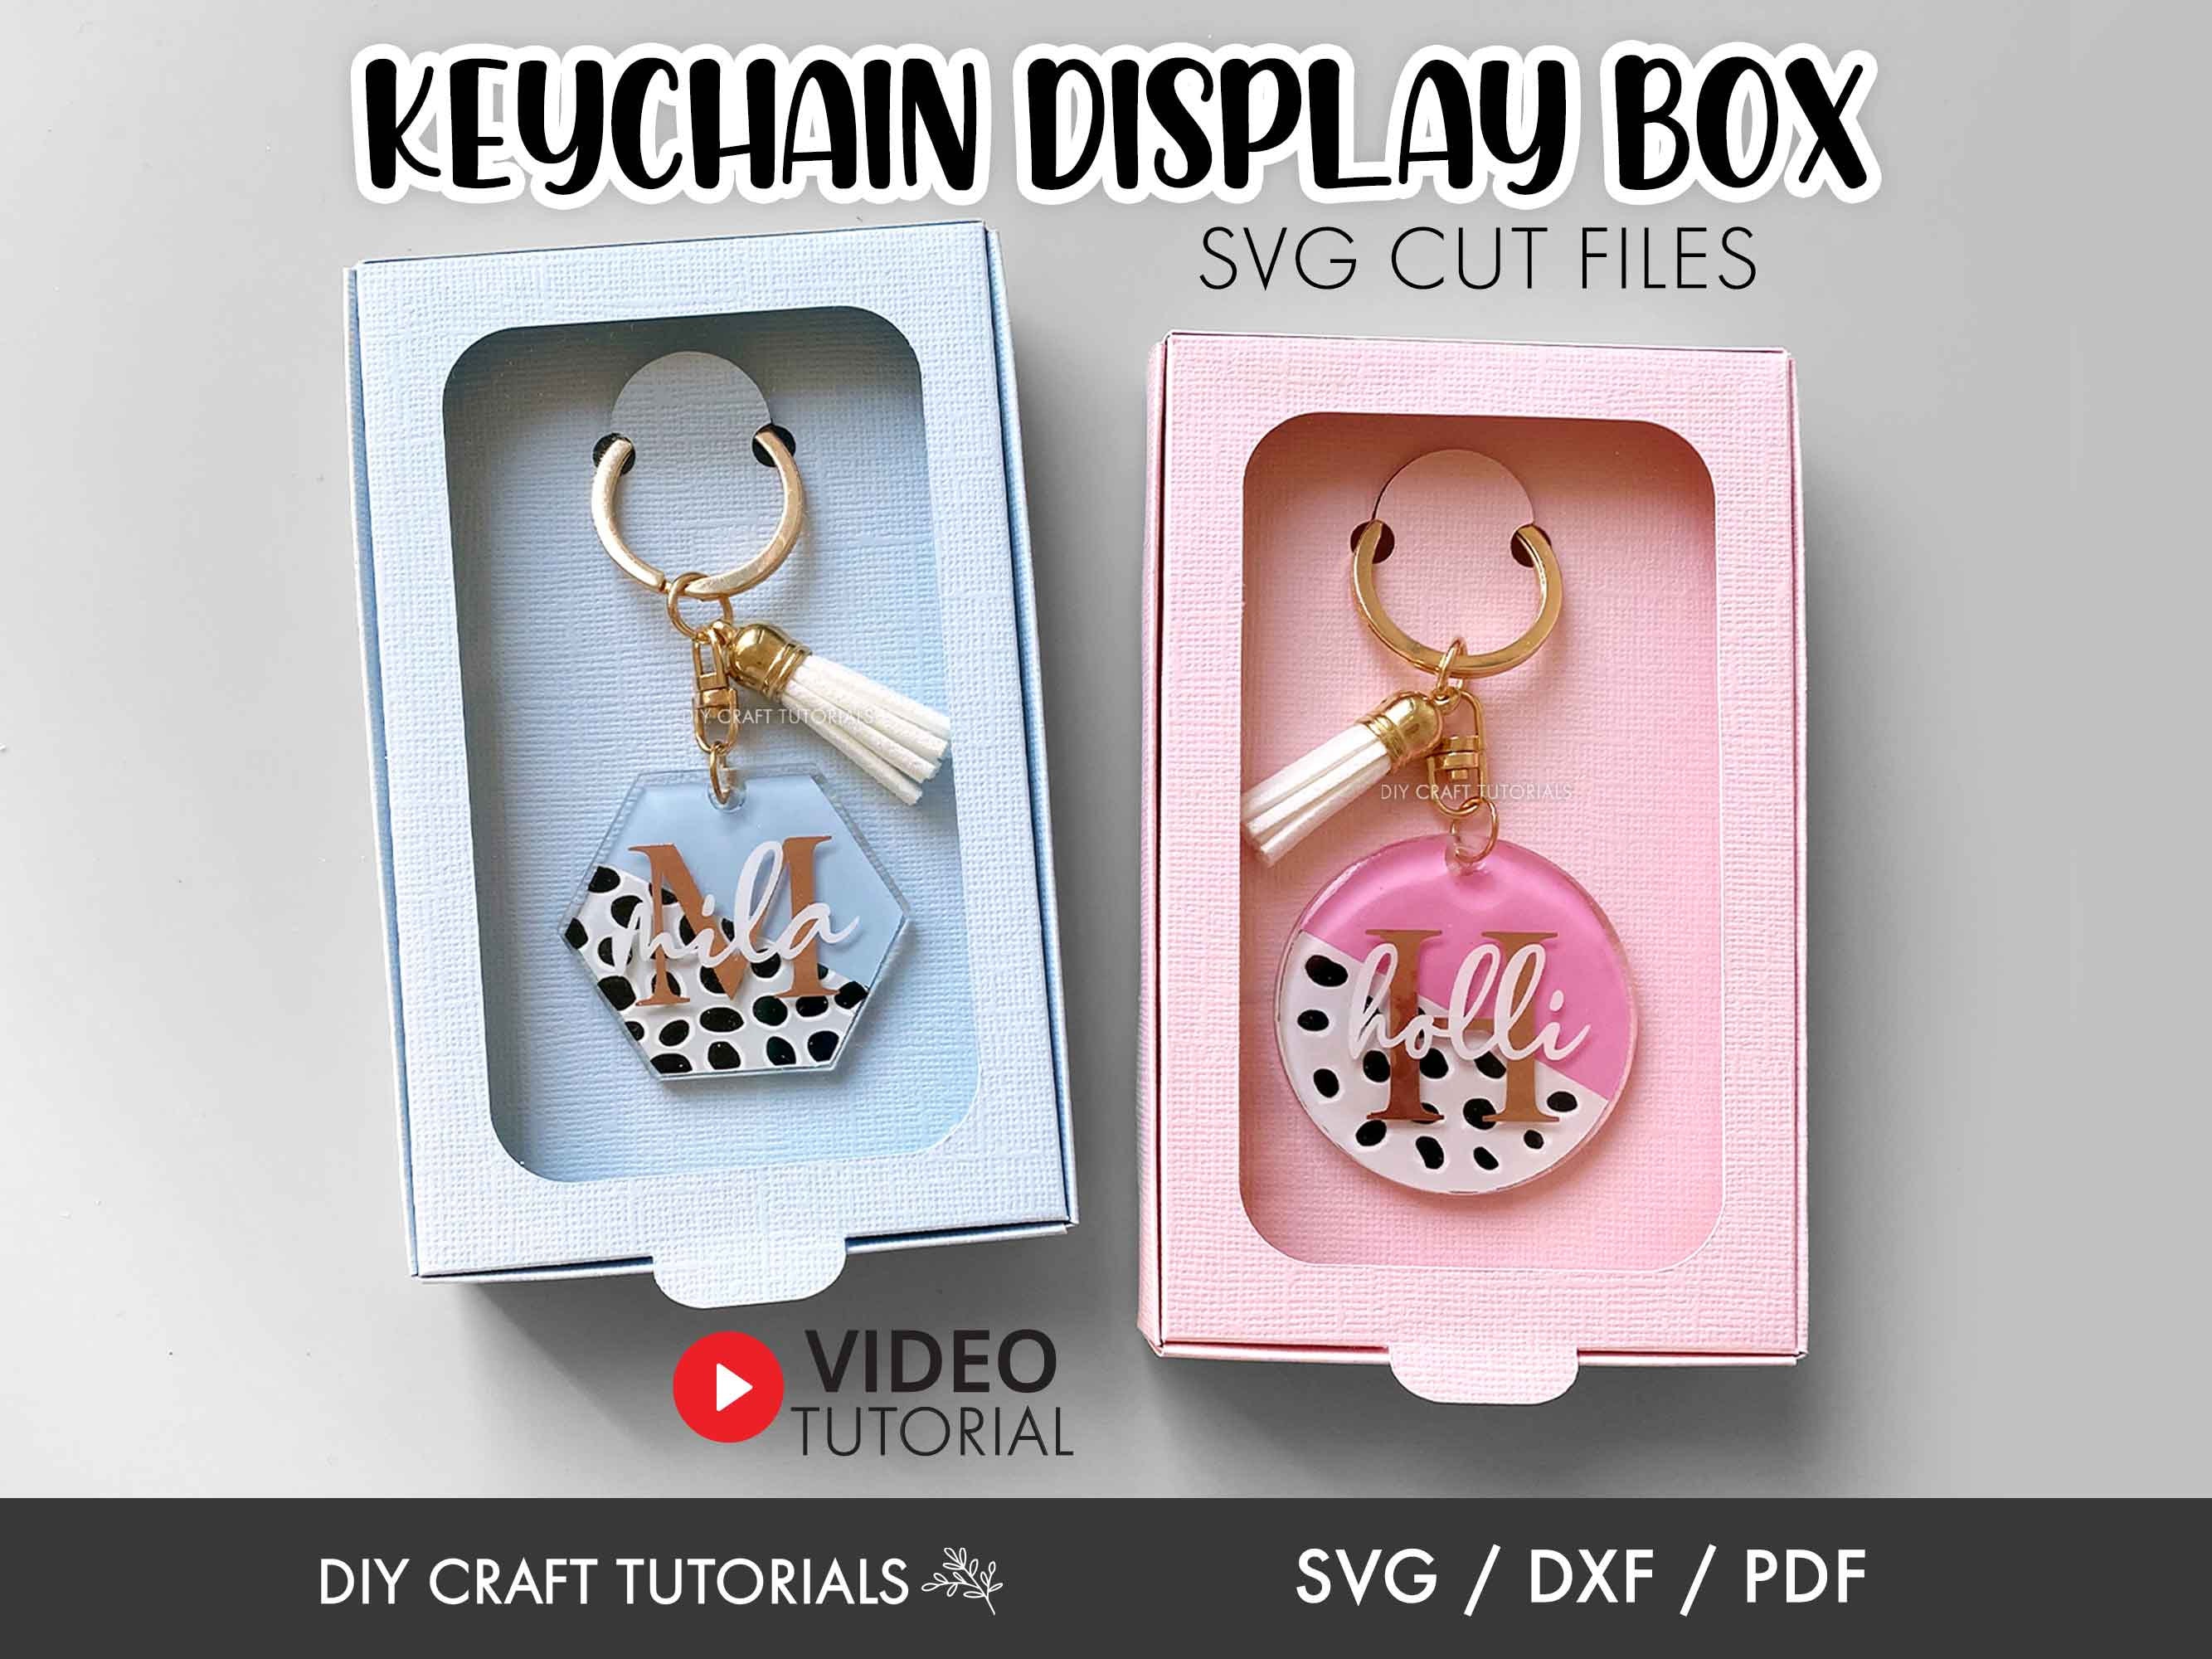 Ornate Keychain Display Card SVG – DIY Craft Tutorials